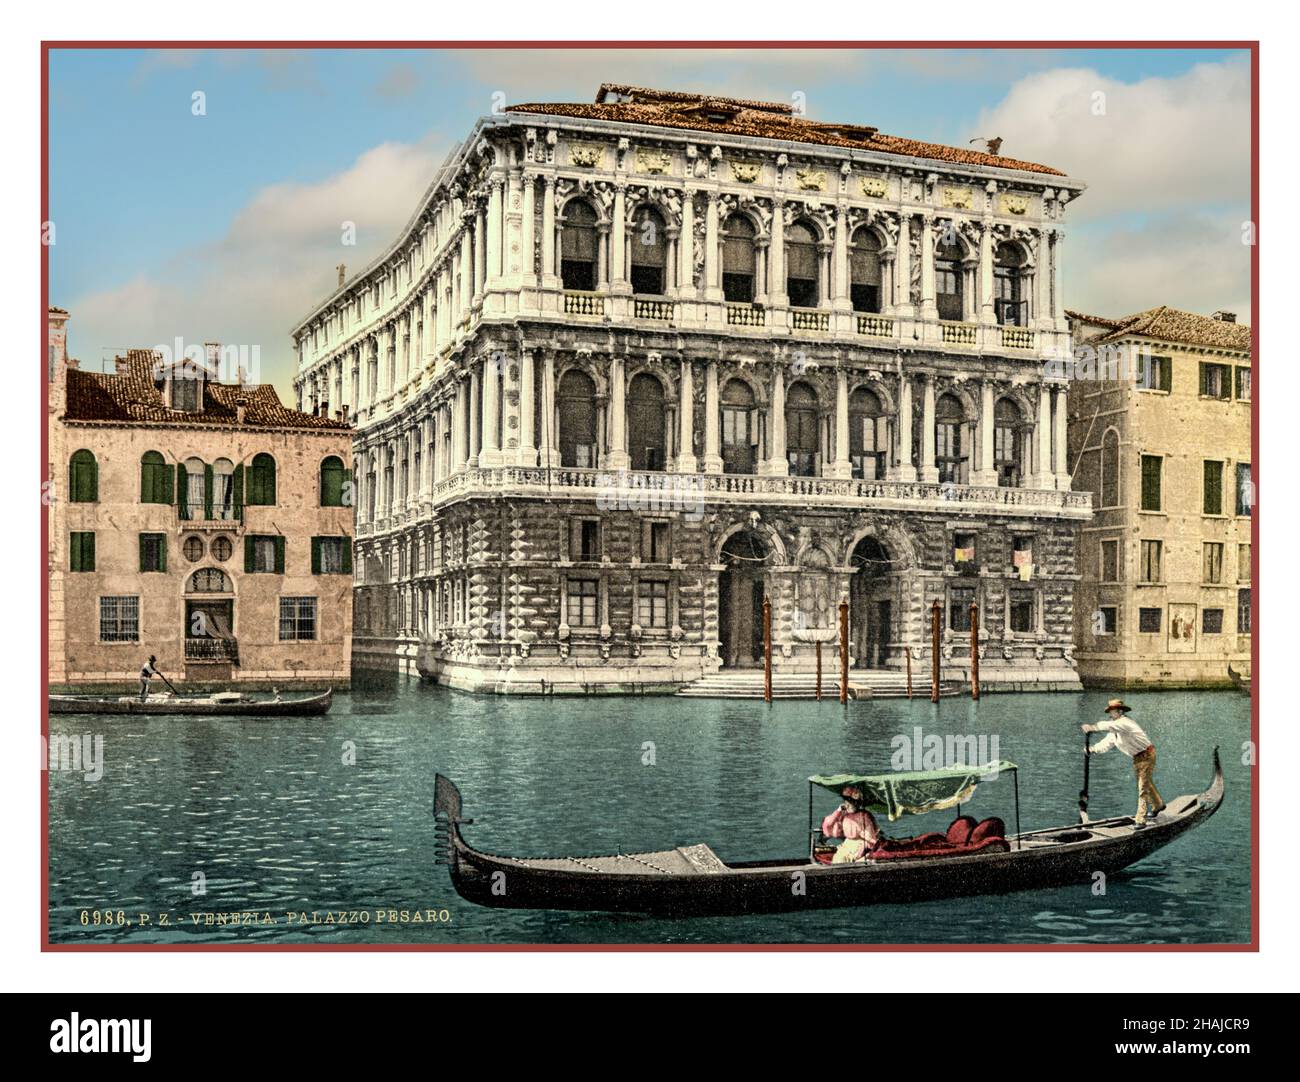 Pesaro Palace, Venedig, Italien 1900 Photochrom-Farbtechnik, mit Gondel im Vordergrund Gondoliere und Passagierin Grand Canal Venedig Italien 'VENEZIA PALAZZO PESARO' Stockfoto